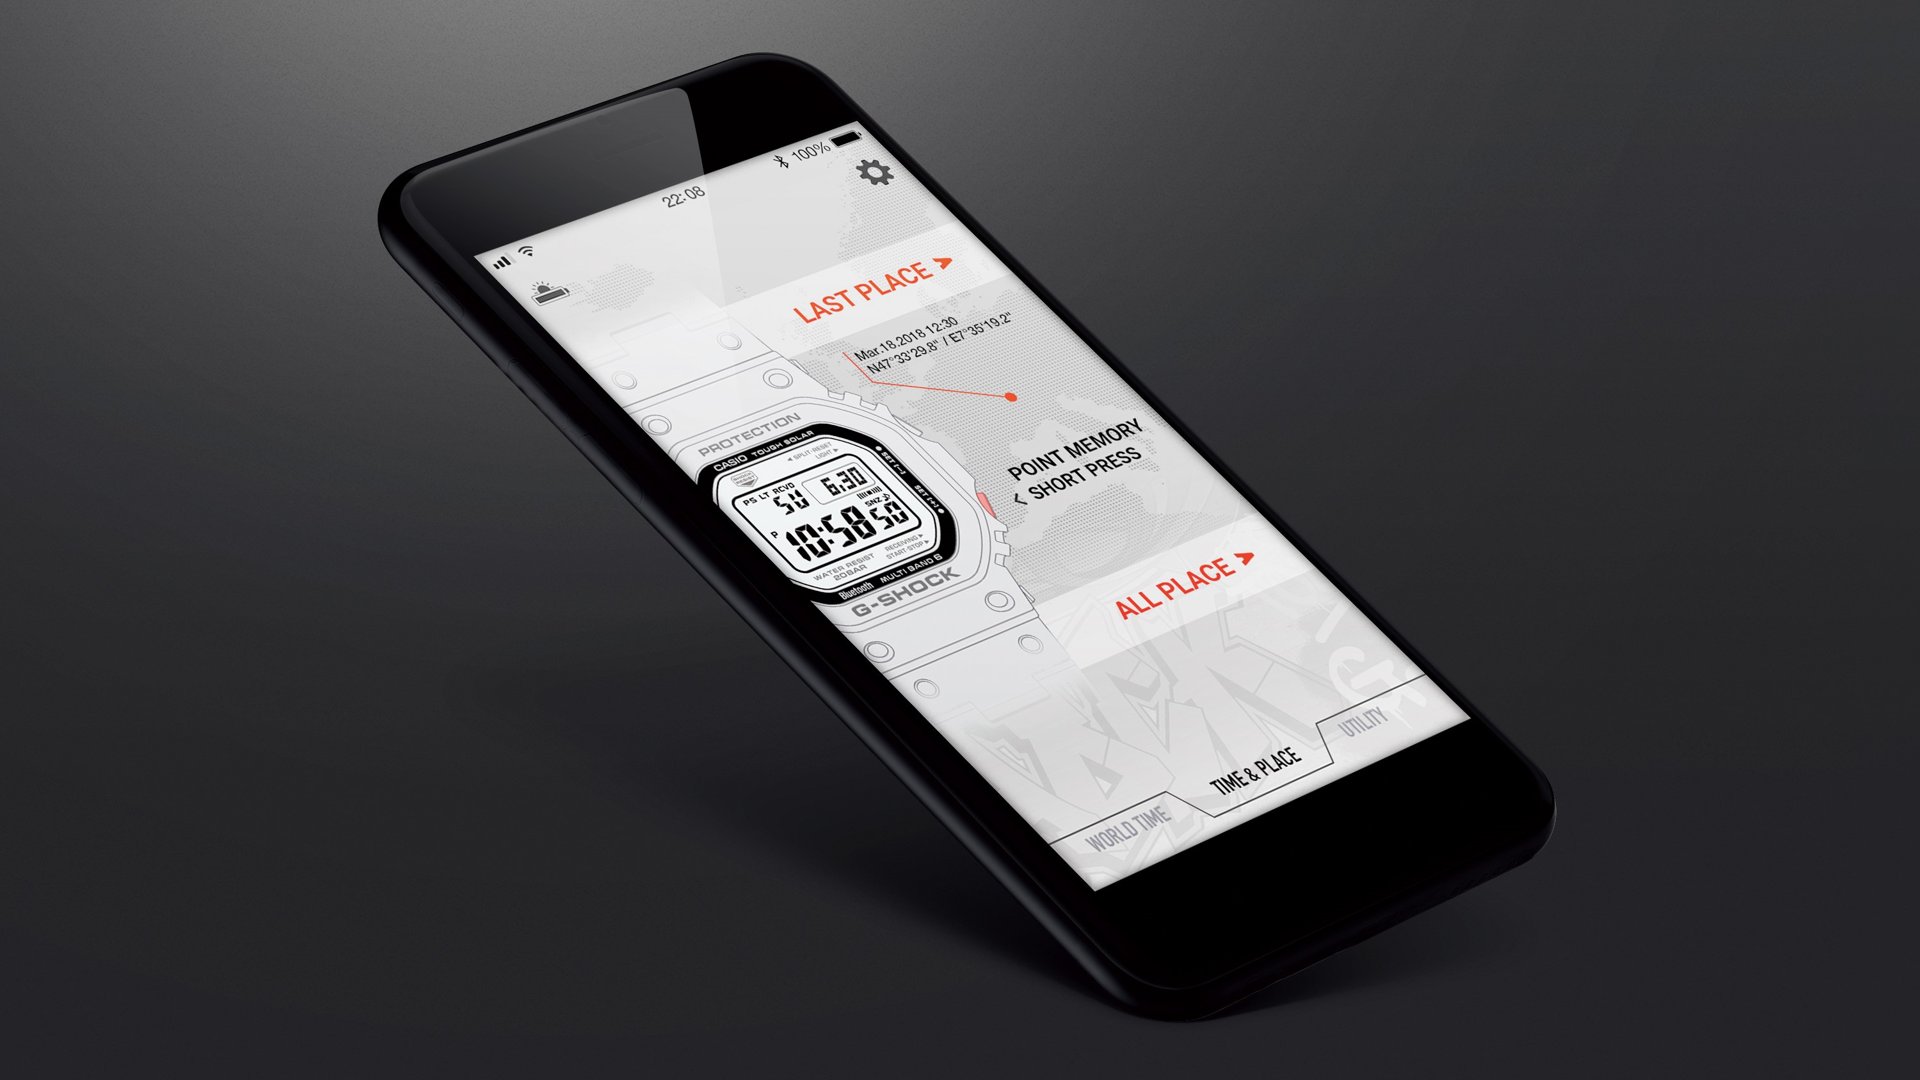 Casio G-Shock app on mobile phone